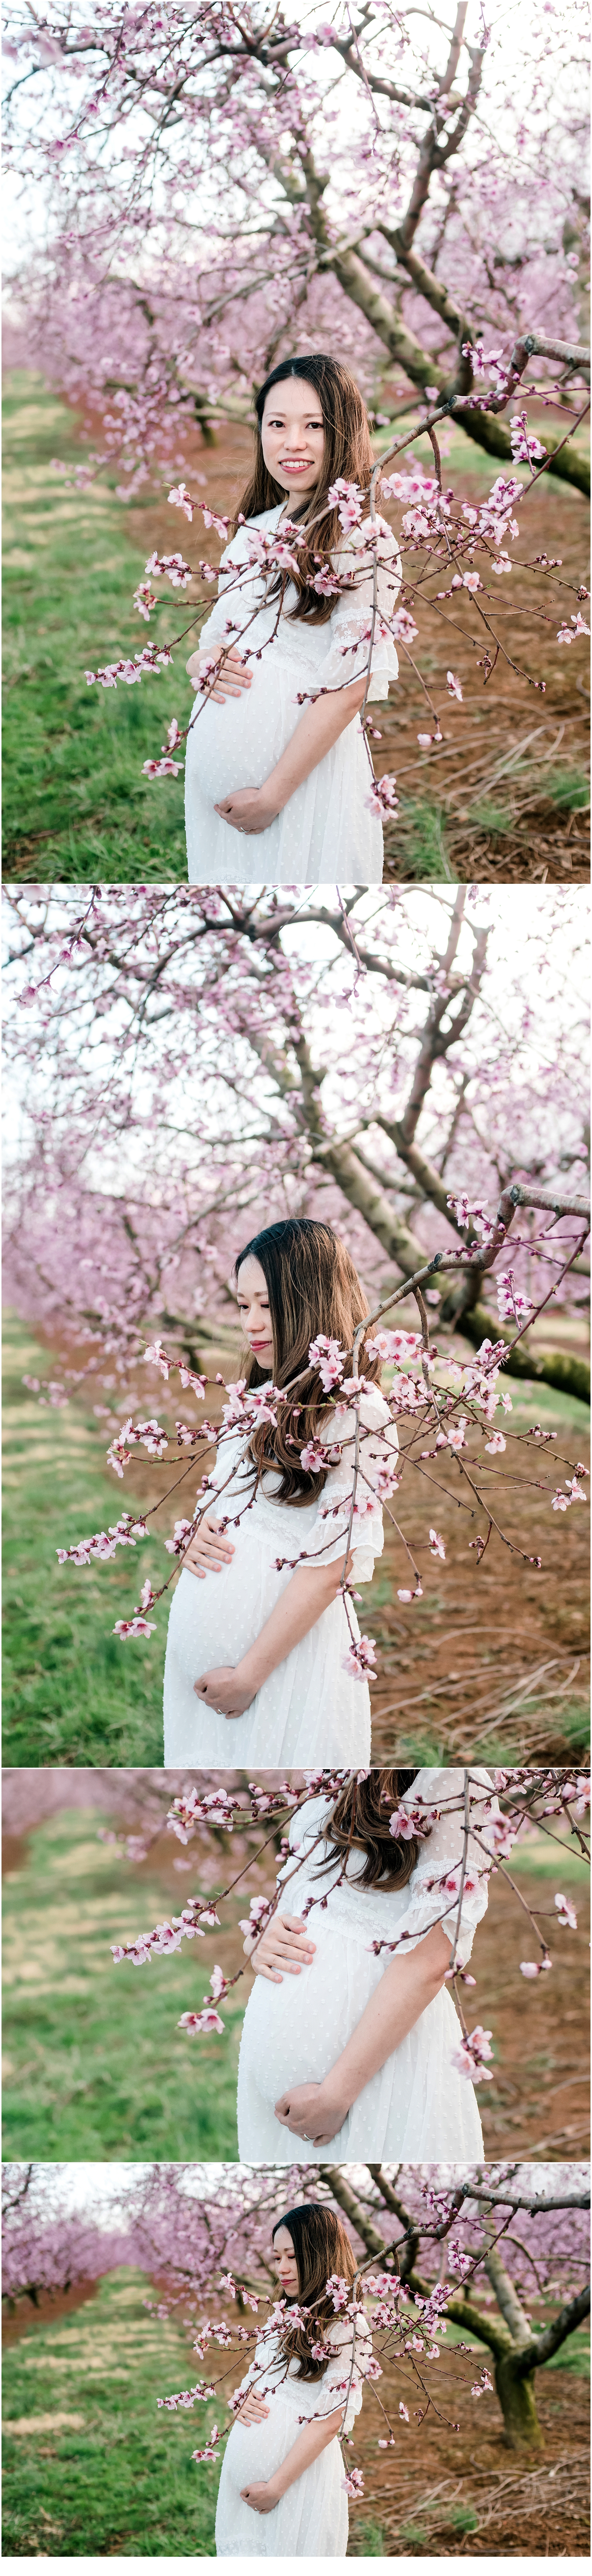 Martinsburg West Virginia Peach Blossom Mini Session Photography 